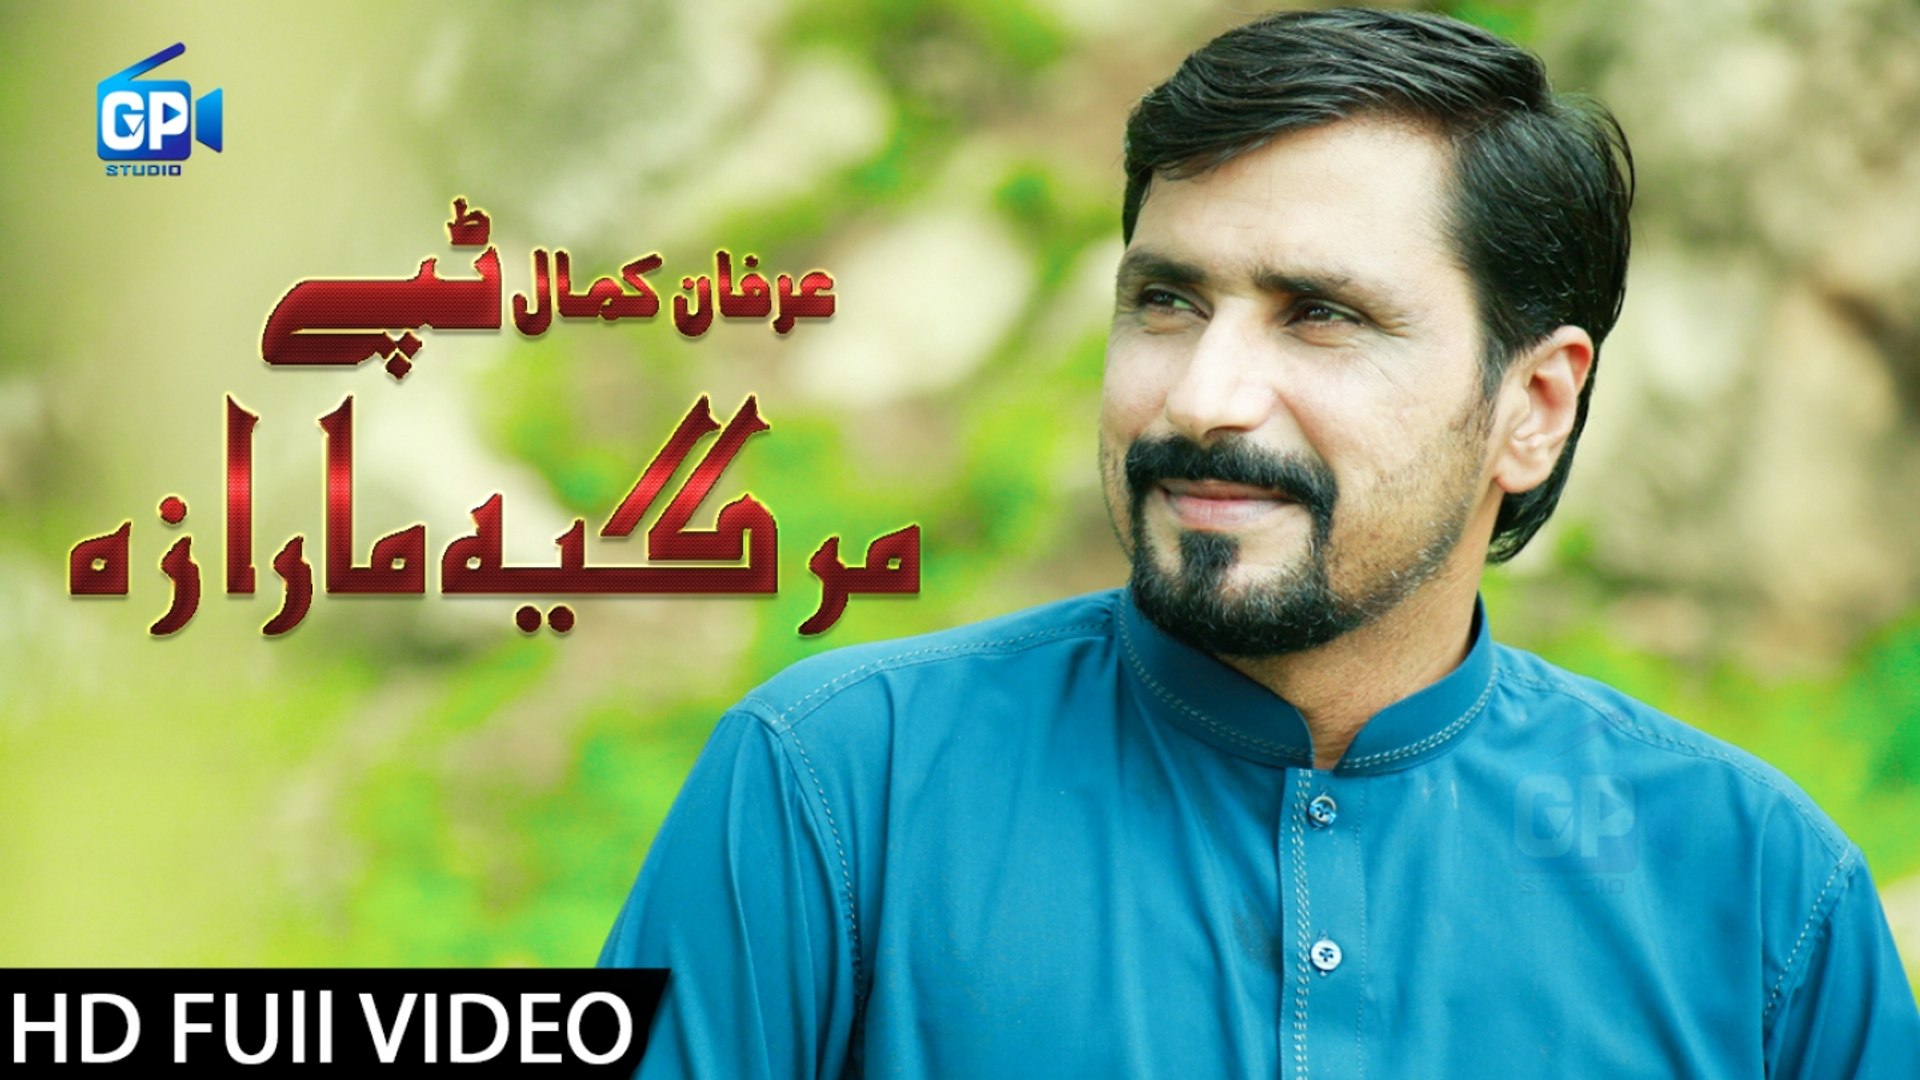 Irfan kamal Pashto new song 2018 - pashto tapy video song best music videos